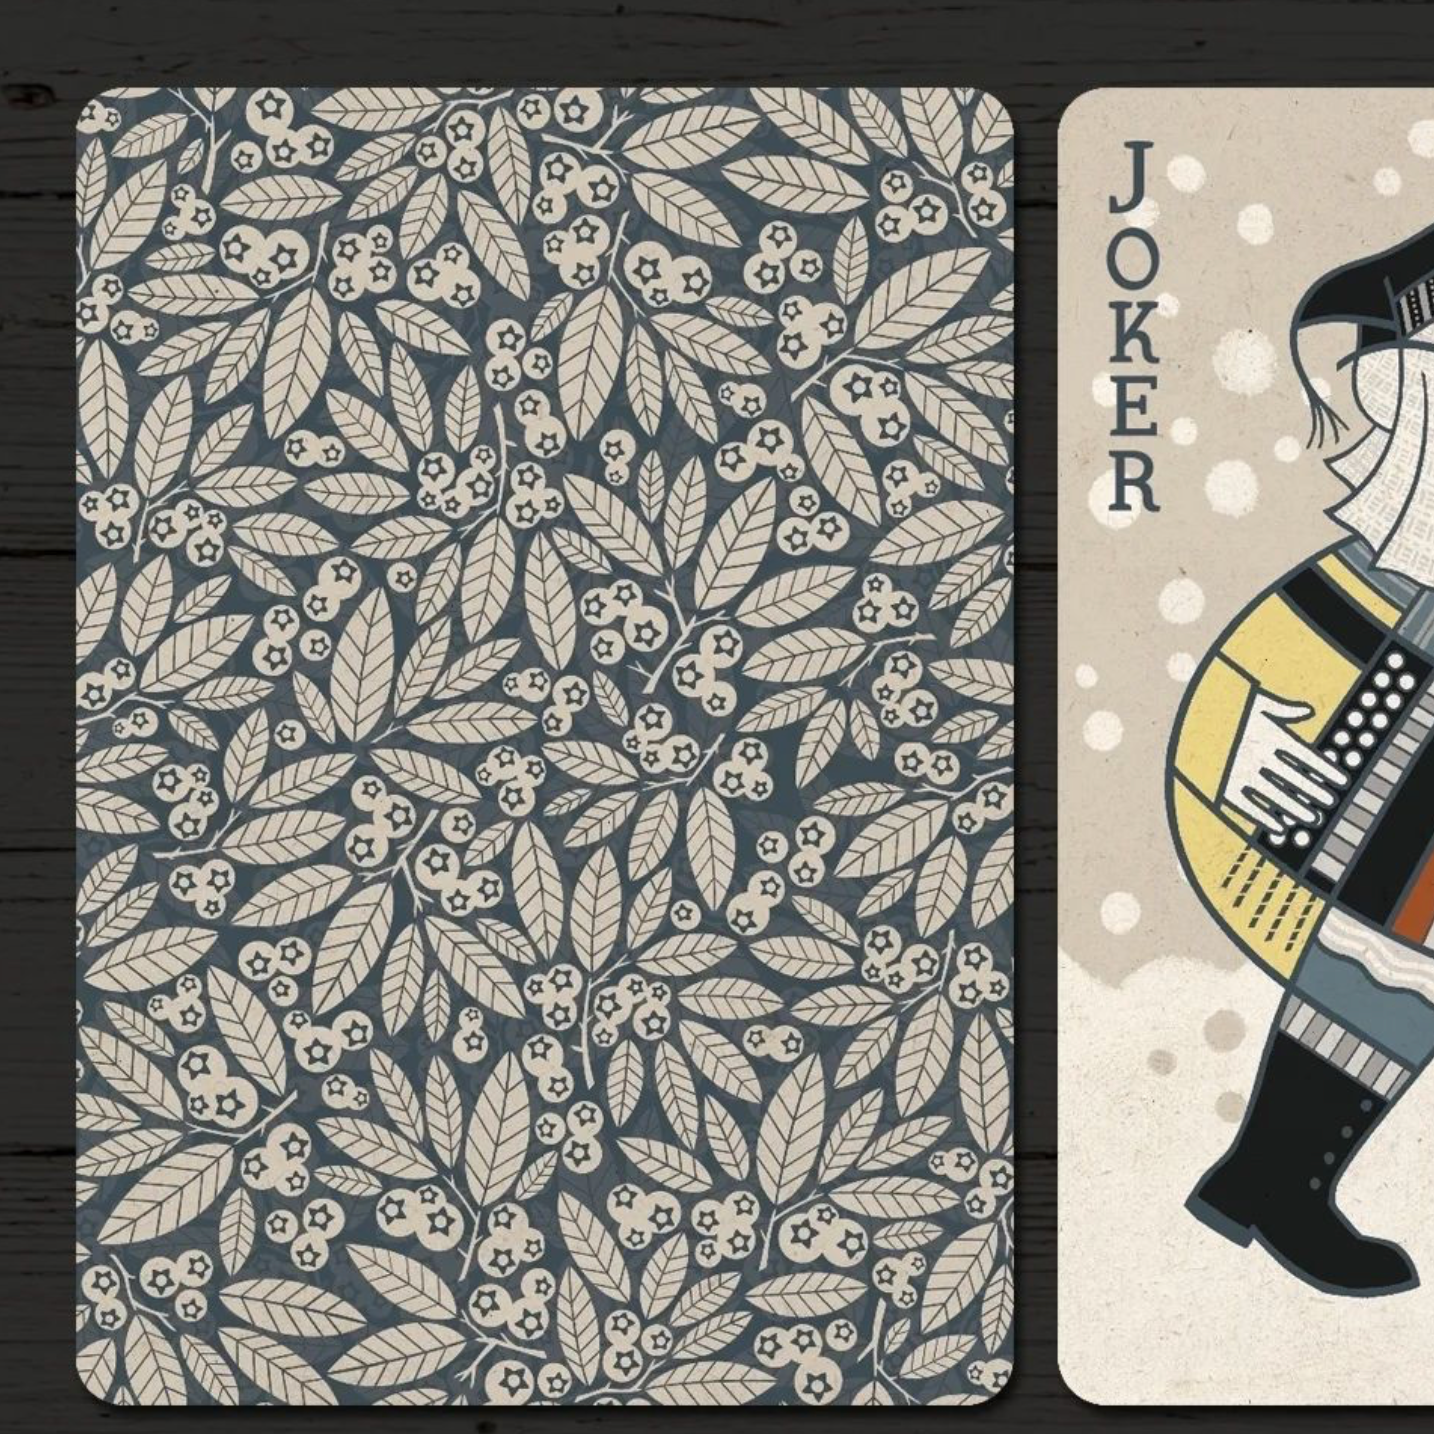 A Newfoundland Deck of Cards - Folklore Edition - Hillhead House